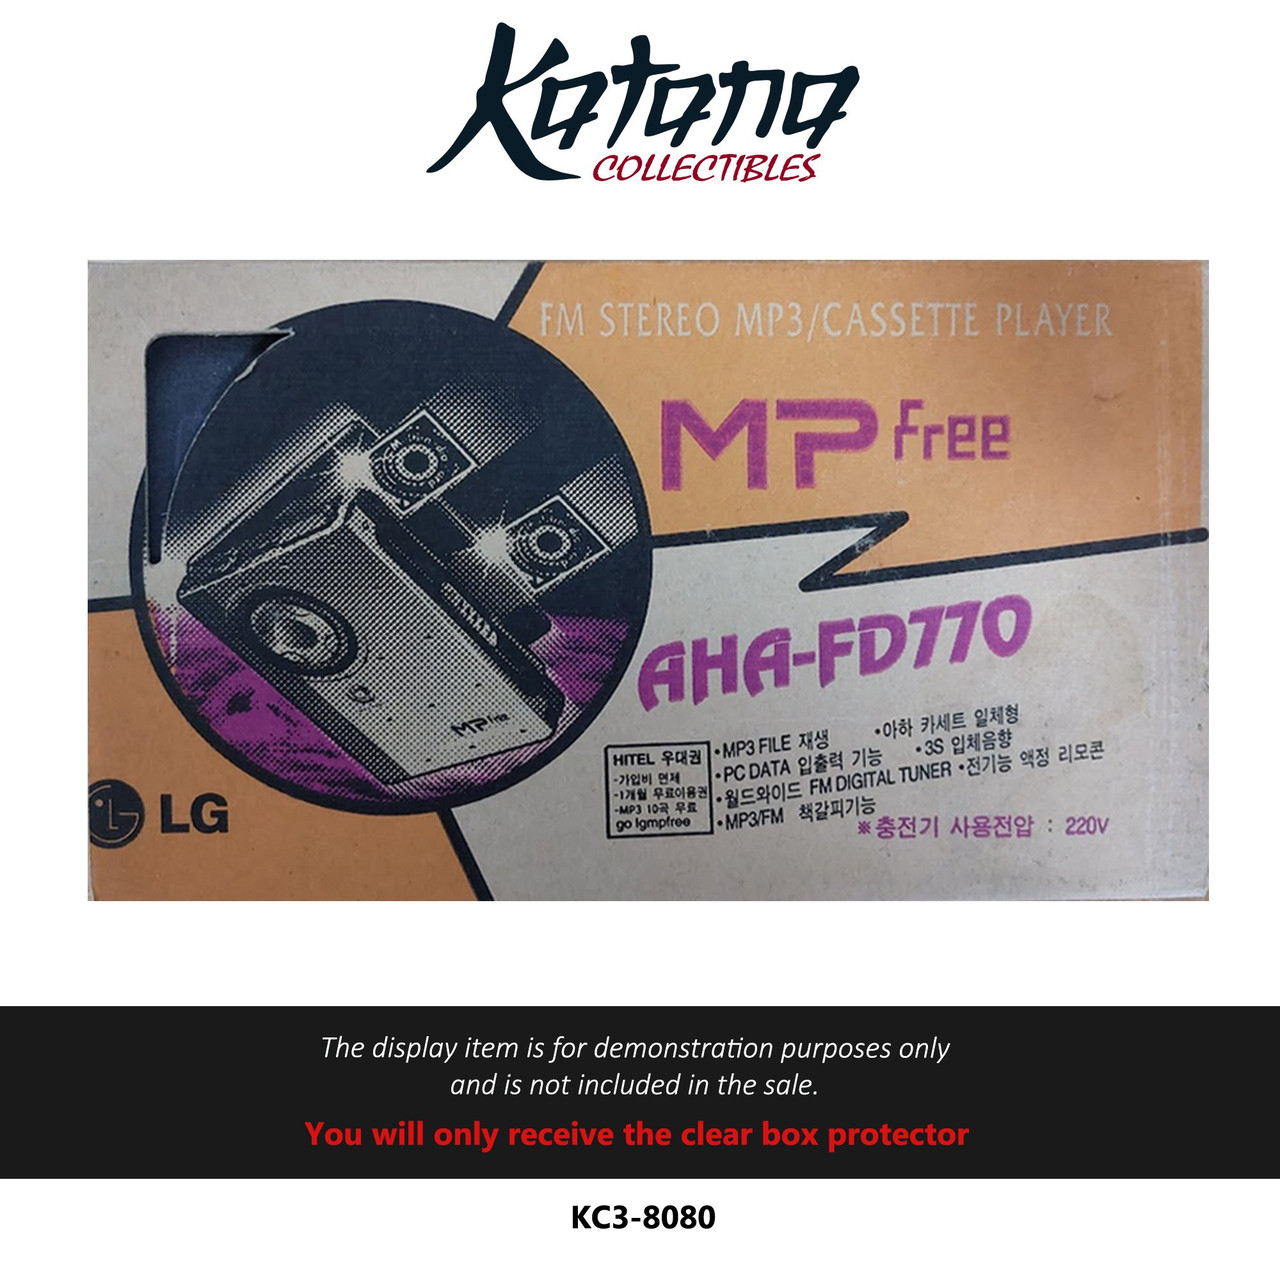 Katana Collectibles Protector For AHA-FD770 (LG MP3 WALKMAN)